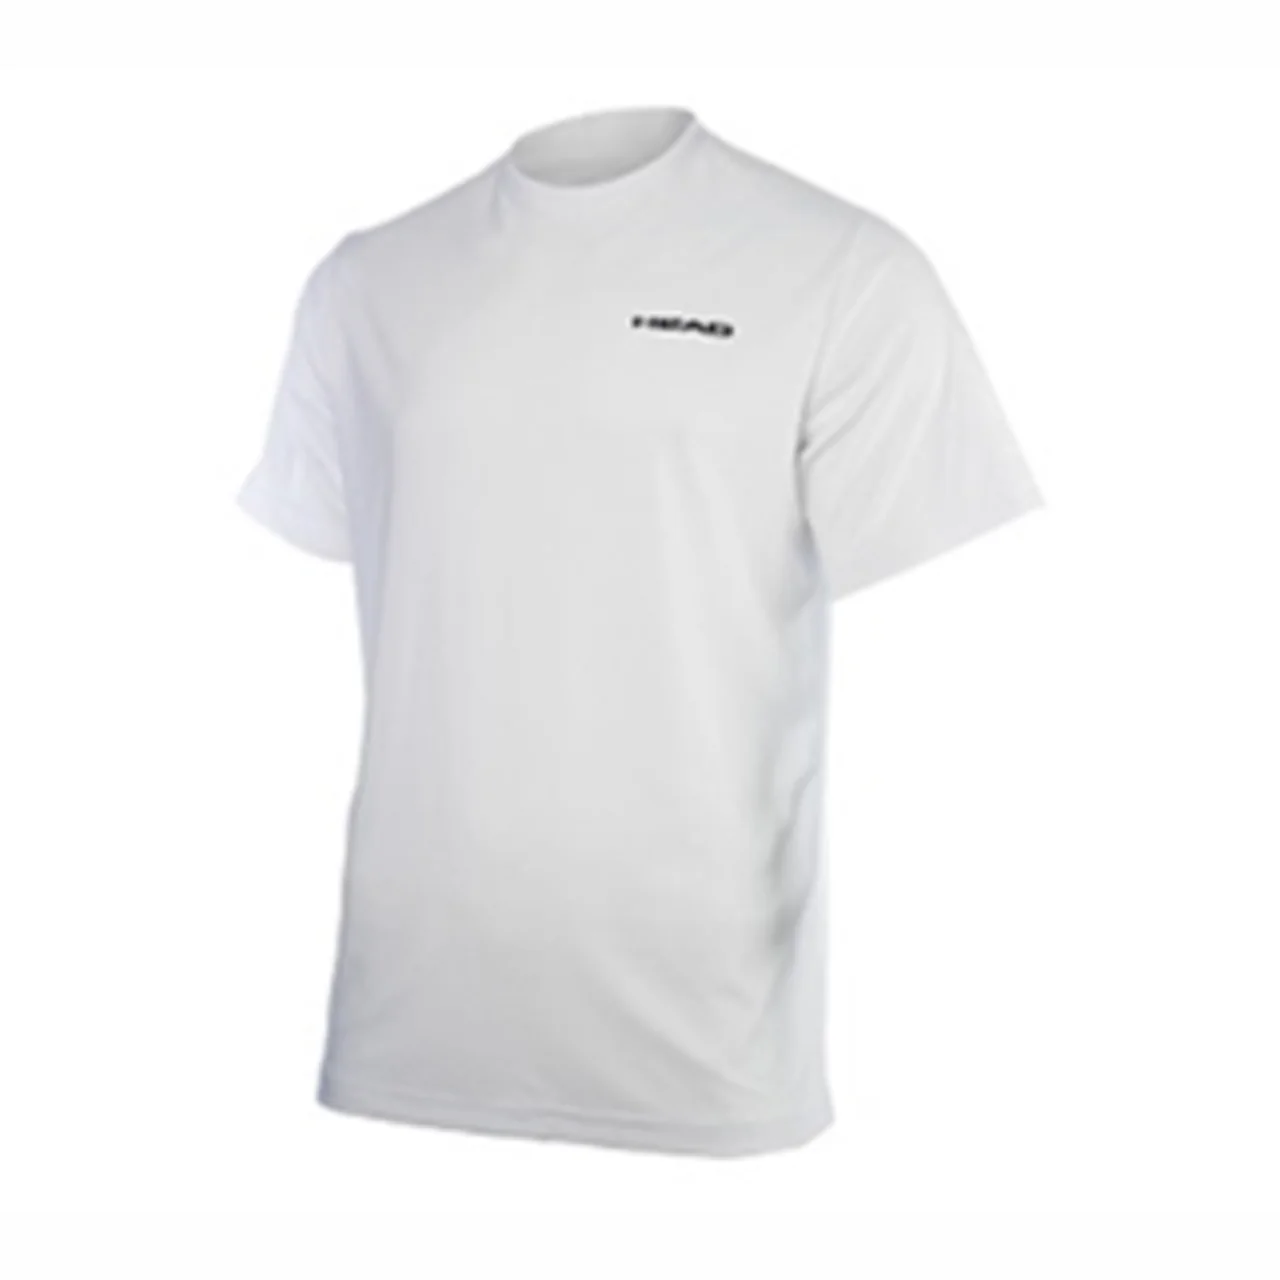 Head Doherty T-shirt White Size S